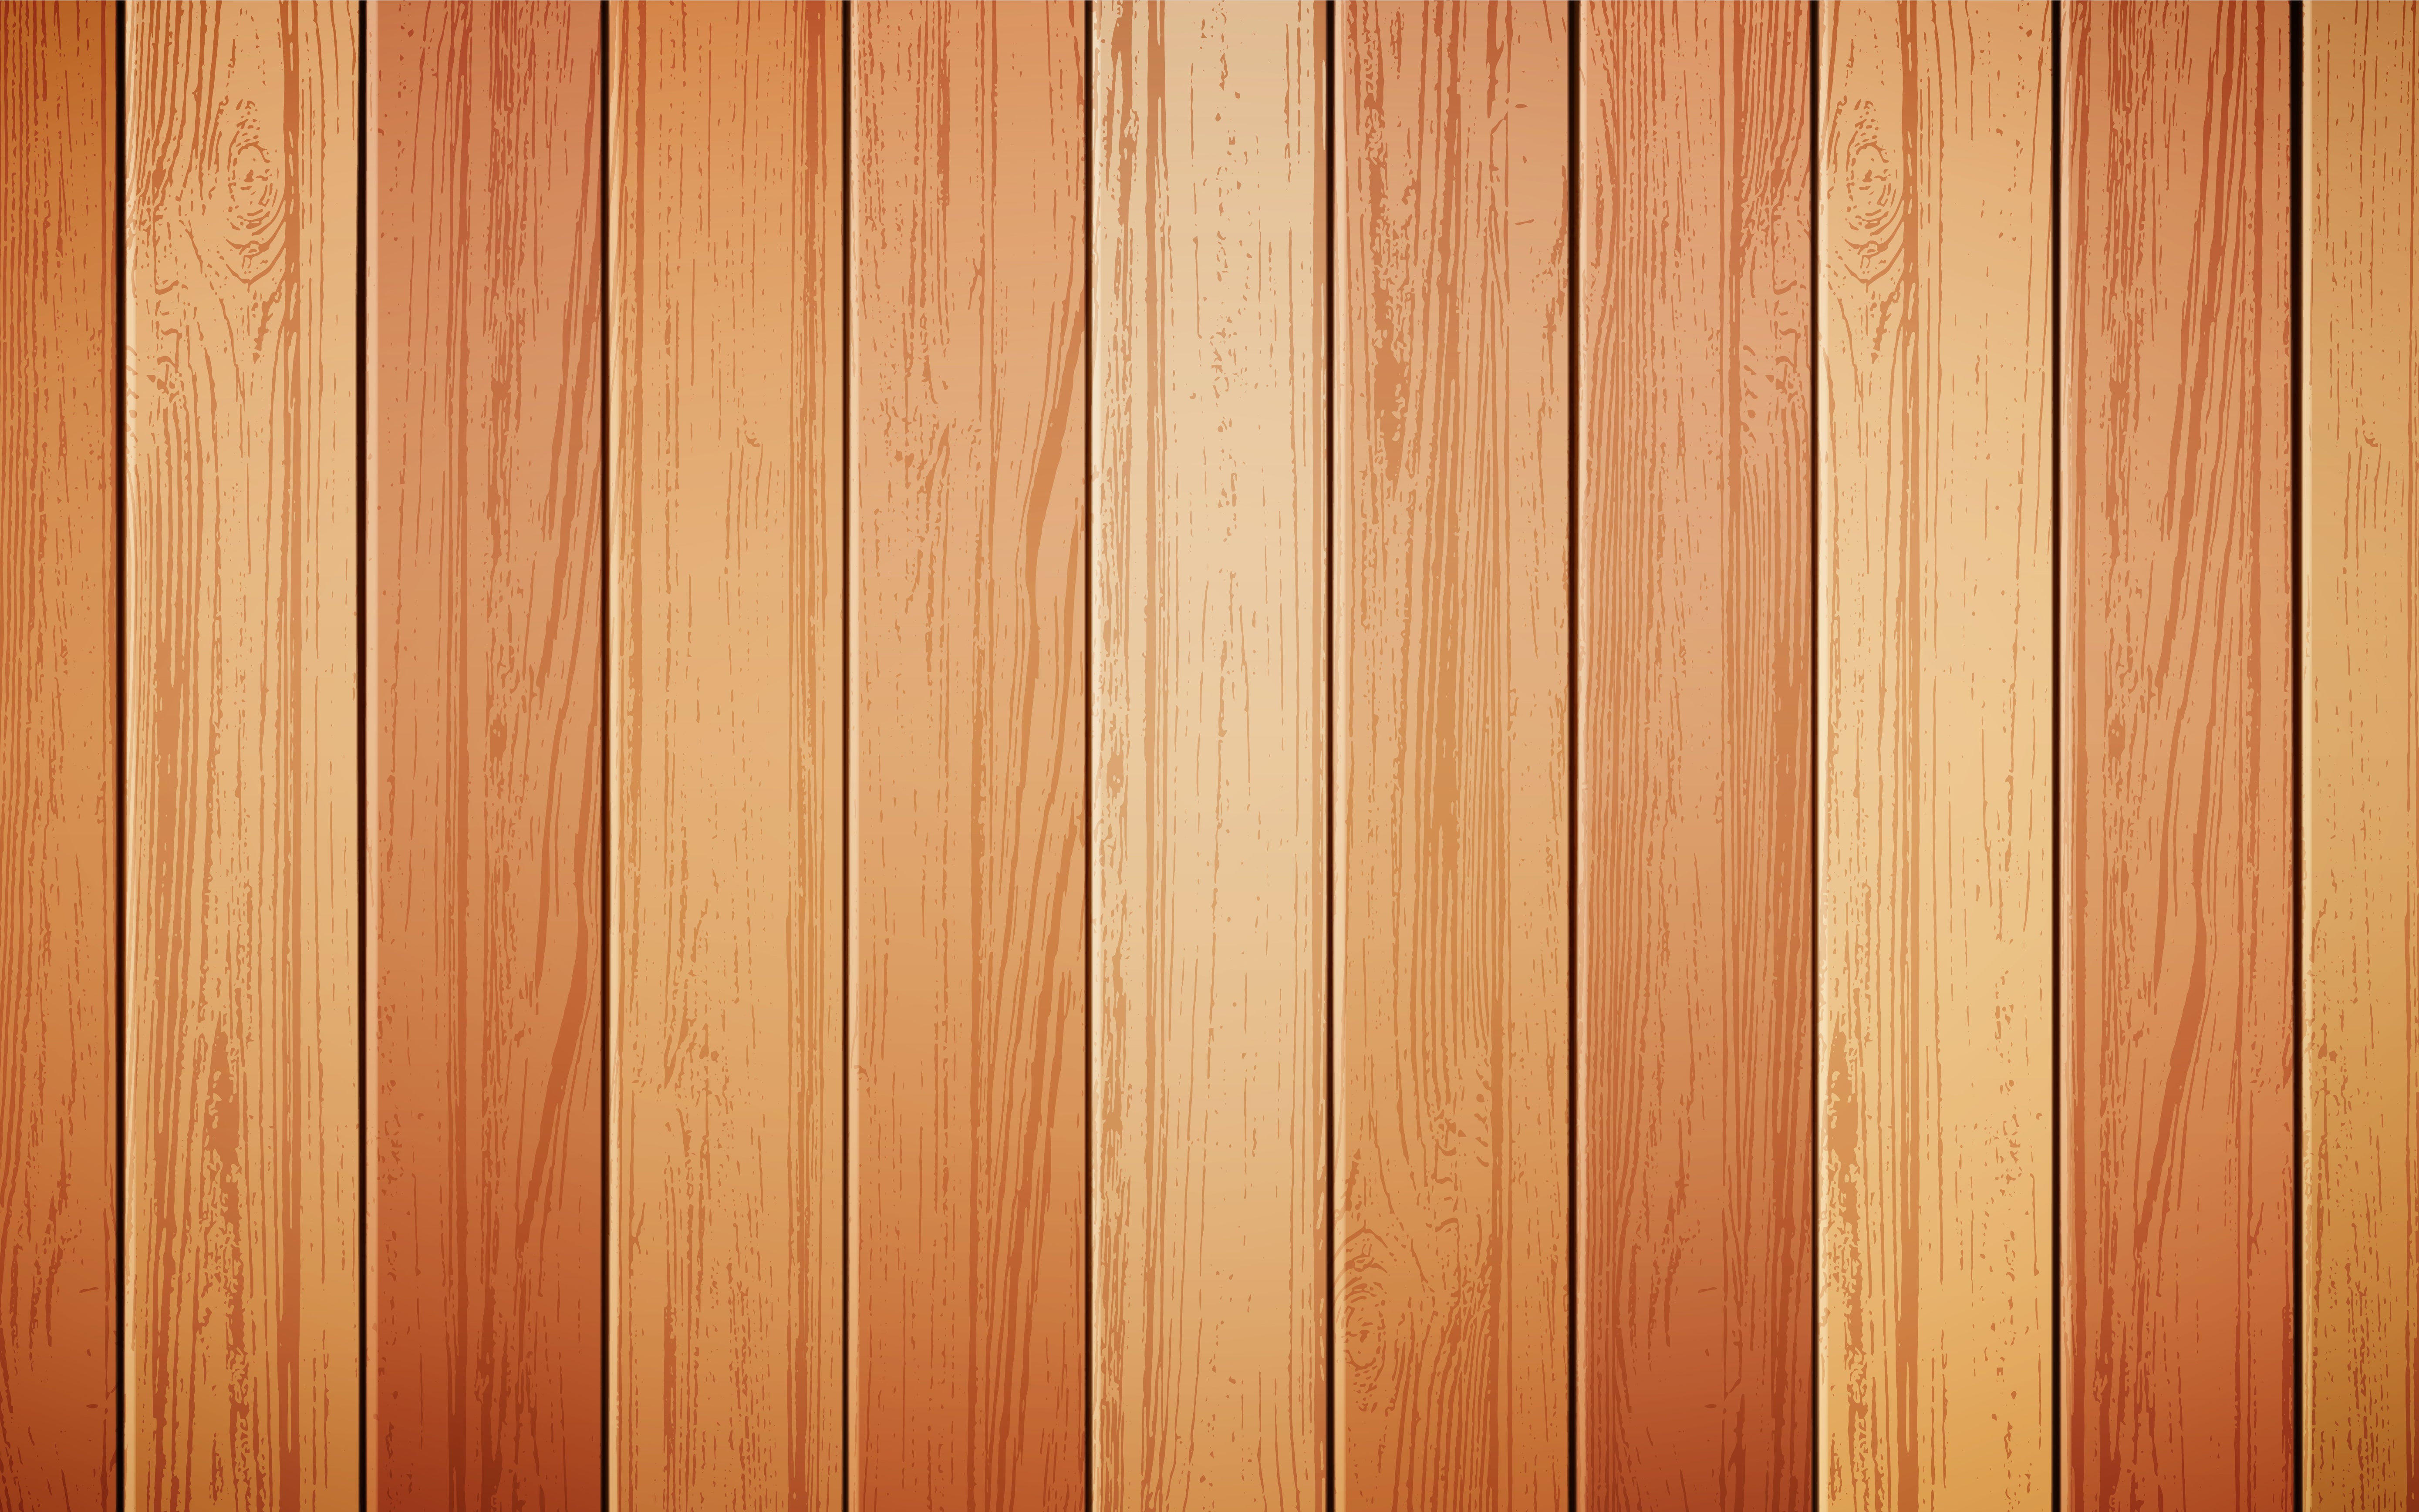 Oak Wood Furniture Vs Birch Wood Furniture – What Should You Choose?